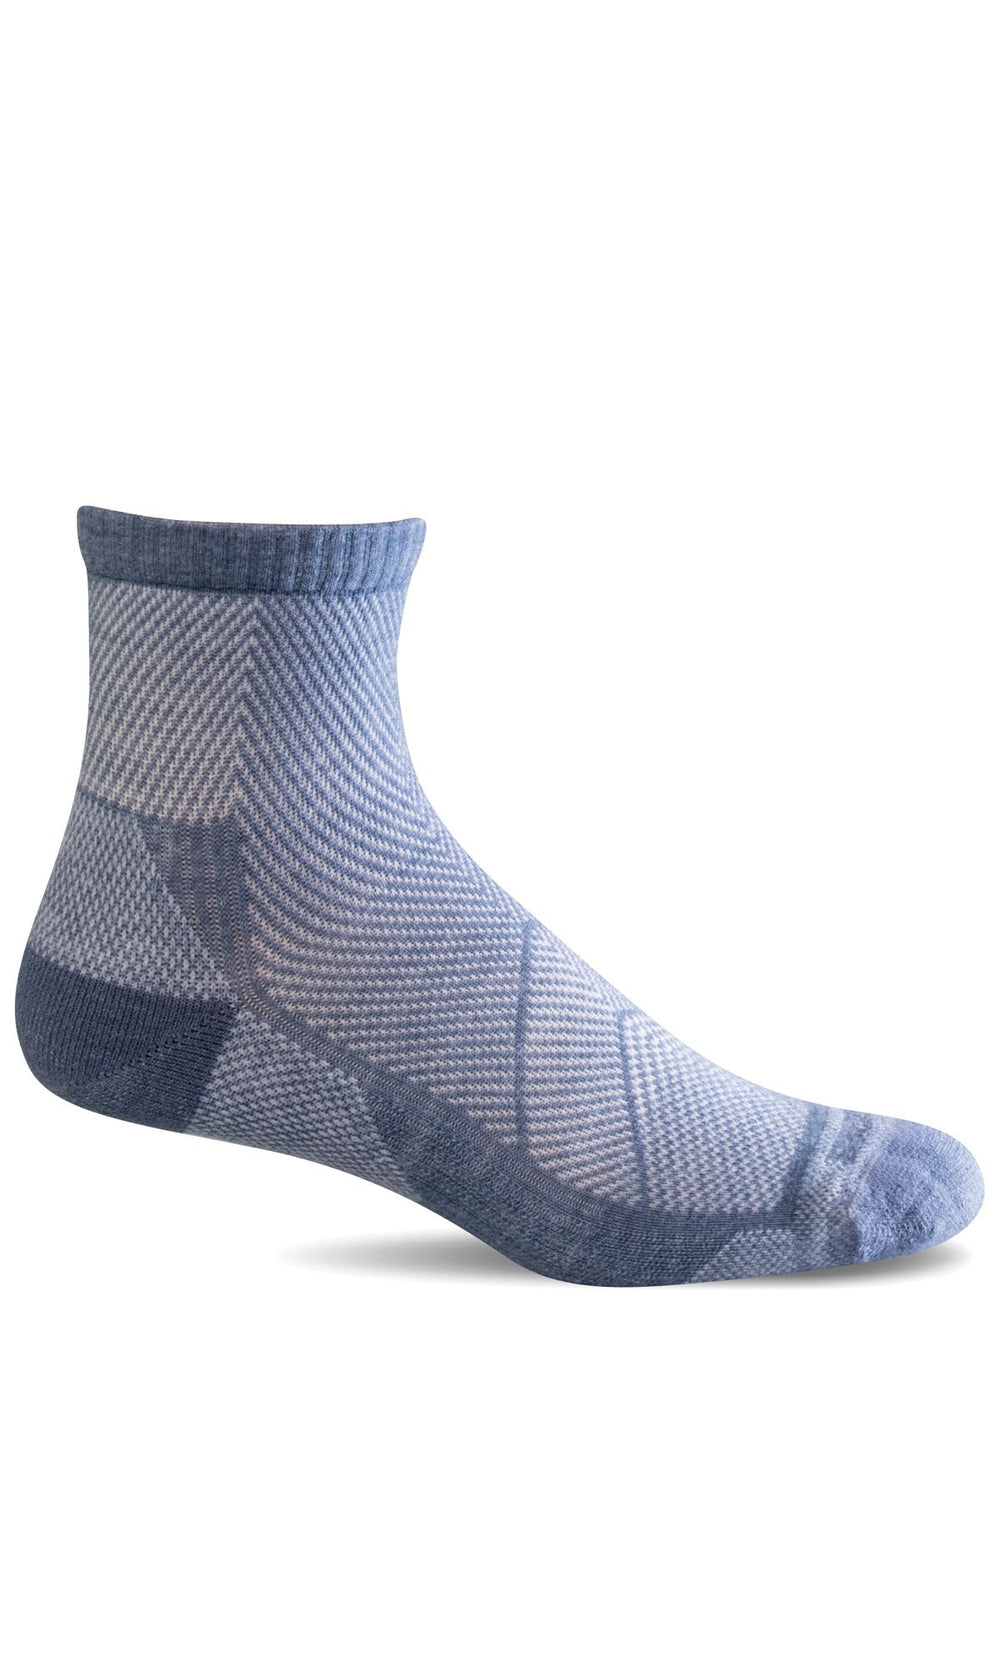 Sockwell Elevate Quarter Firm Compression Socks (Women's)